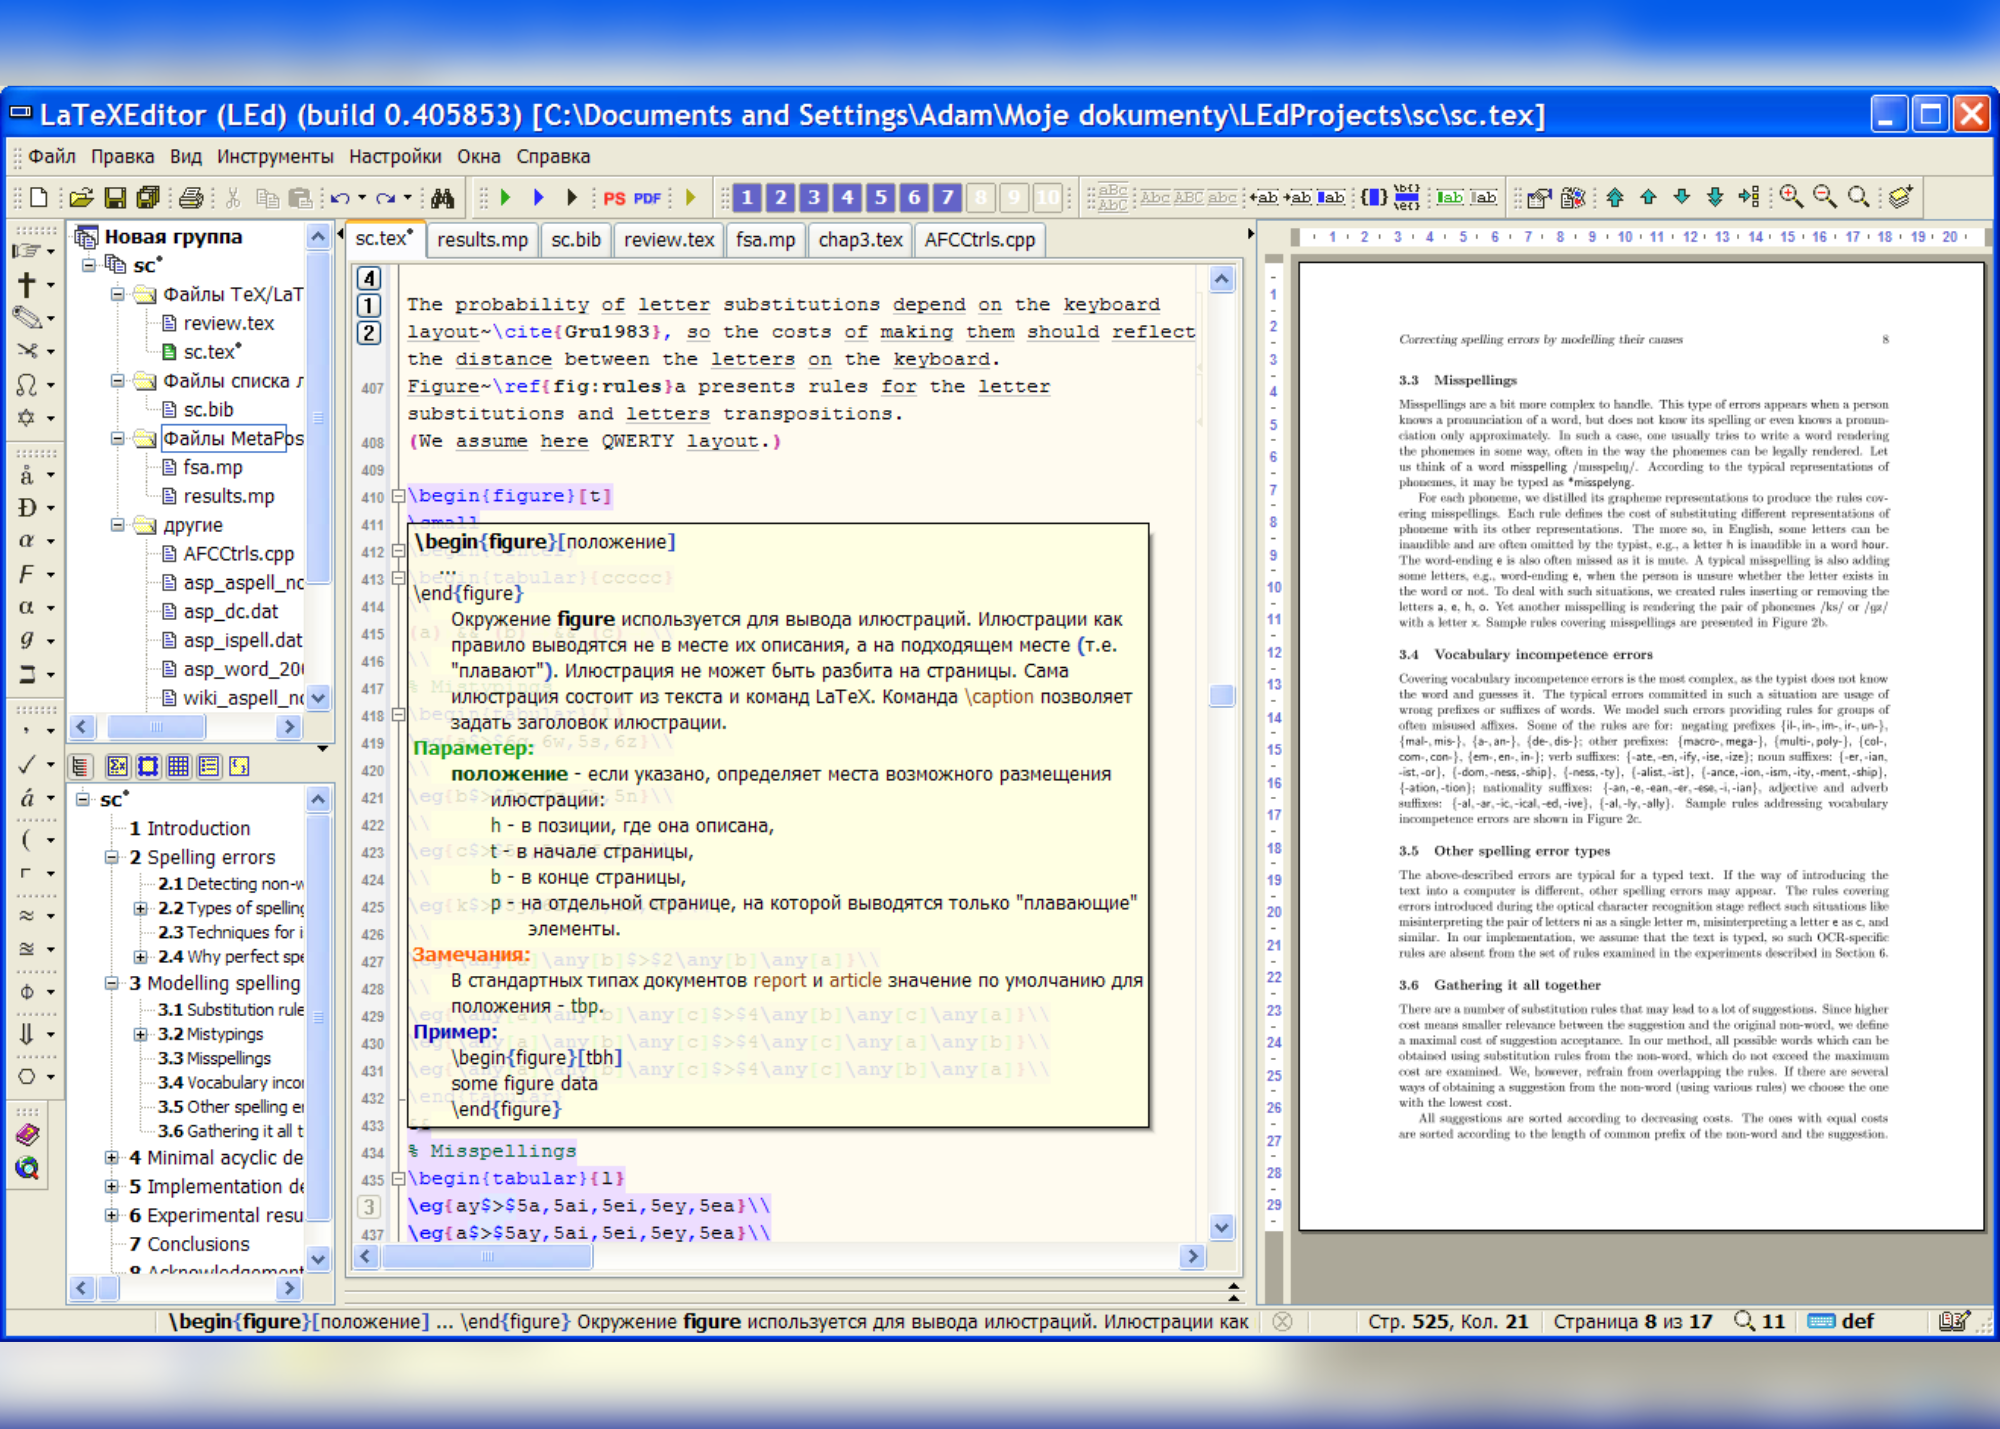 A screennshot showing sc.tex tab